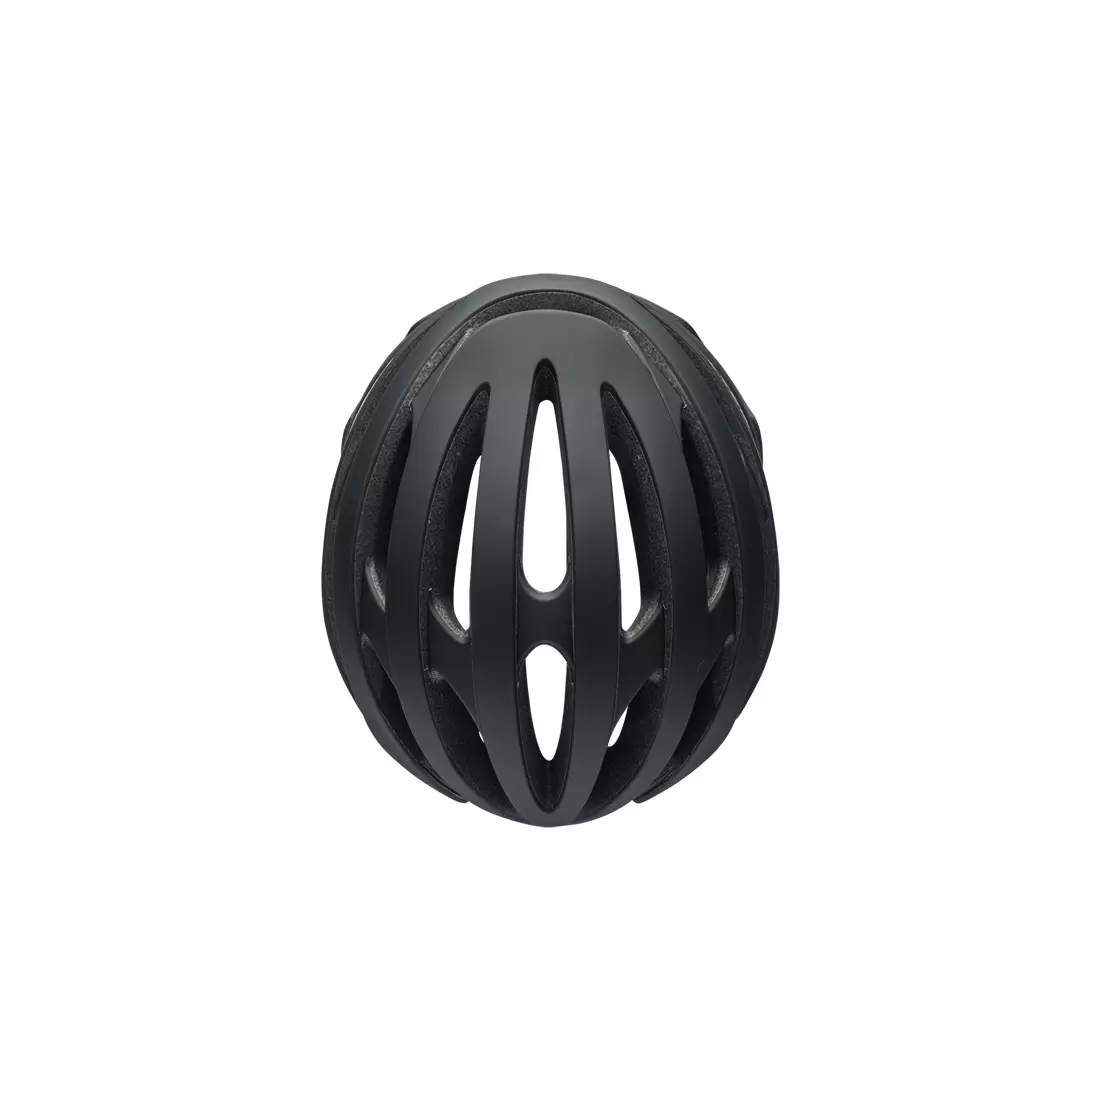 BELL STRATUS MIPS BEL-7090812 cyklistická helma matte black